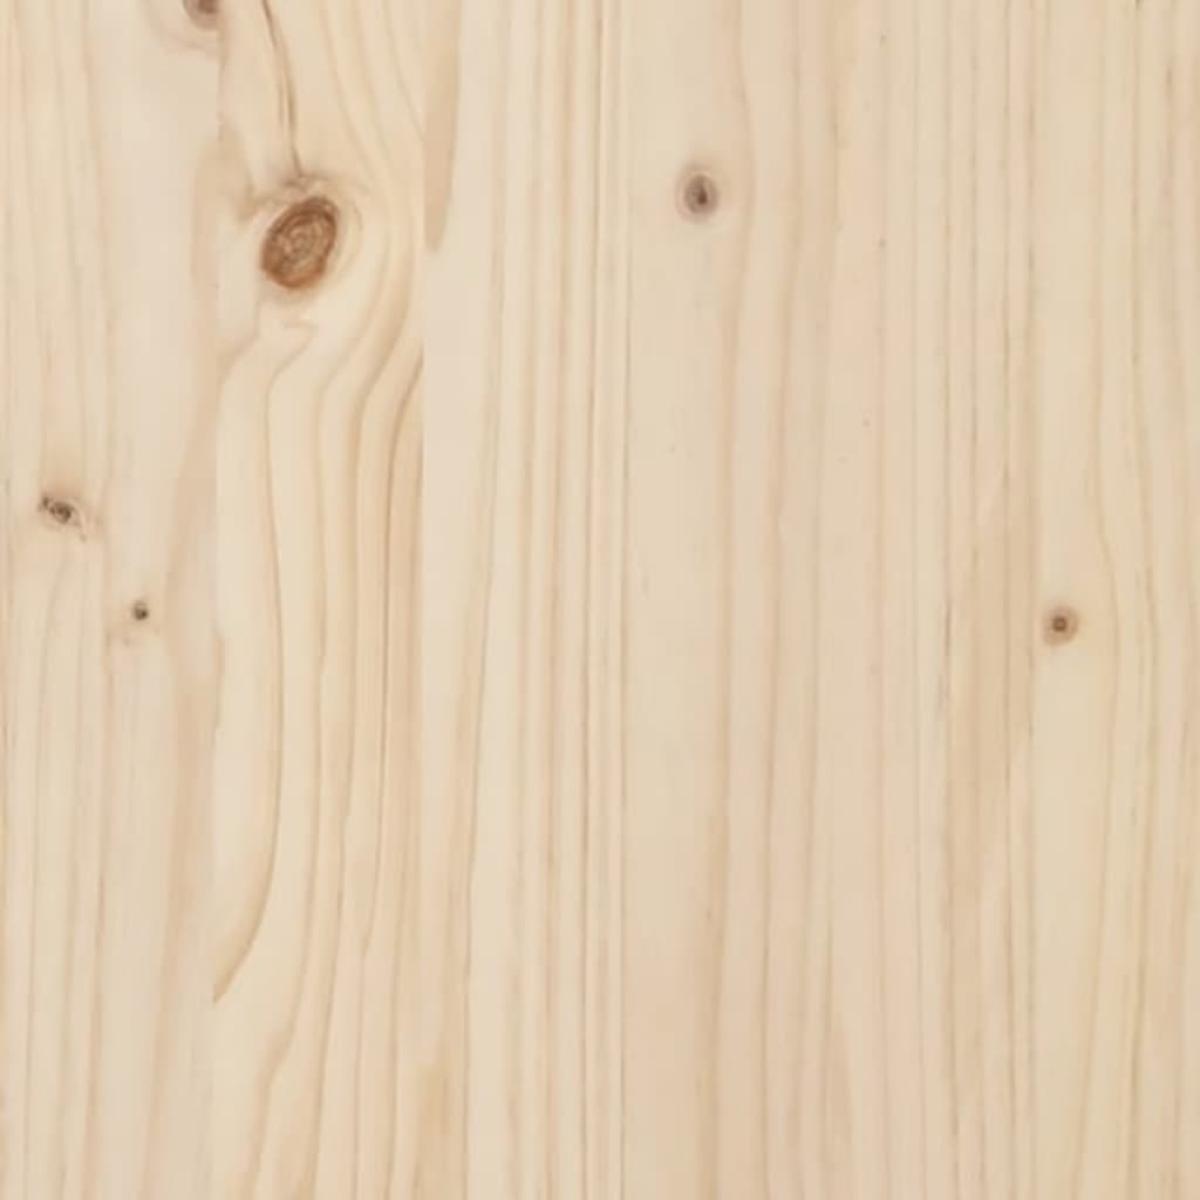 Estructura de cama madera maciza de pino individual 90x190 cm